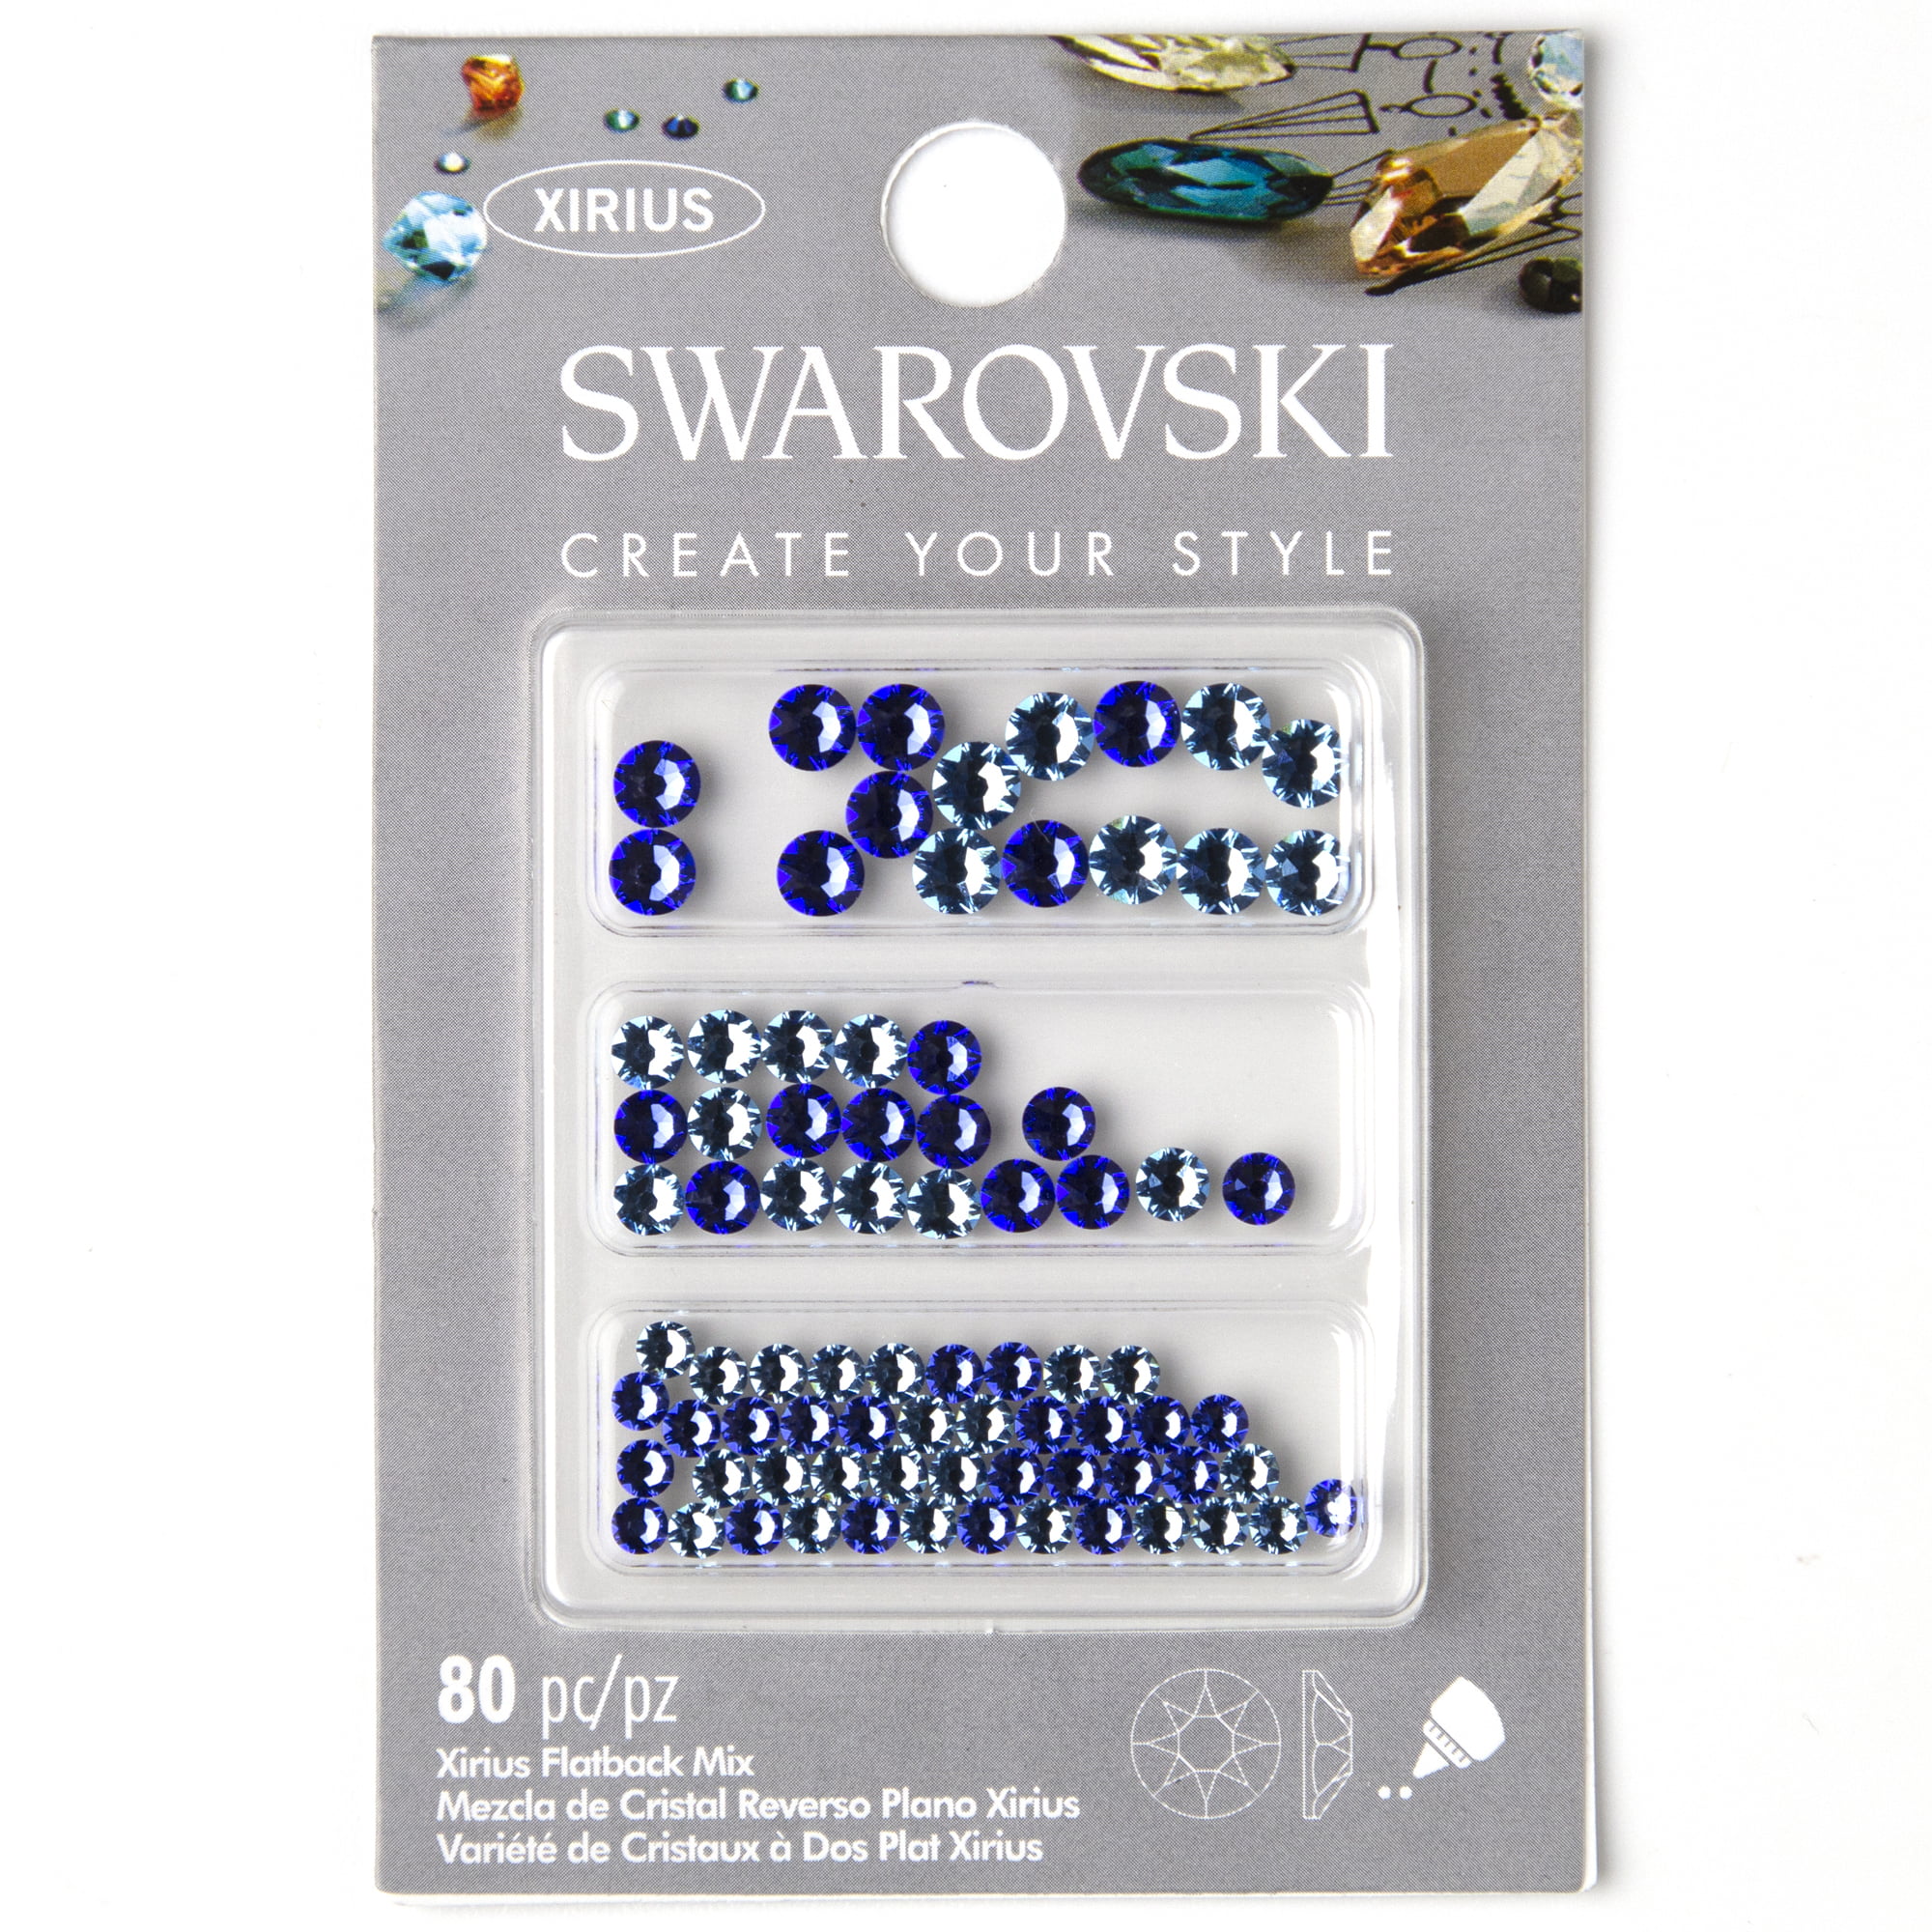 Ruimteschip Regeneratie loyaliteit Swarovski Create Your Style Crystal Flatback Value Pack, Red Siam -  Walmart.com